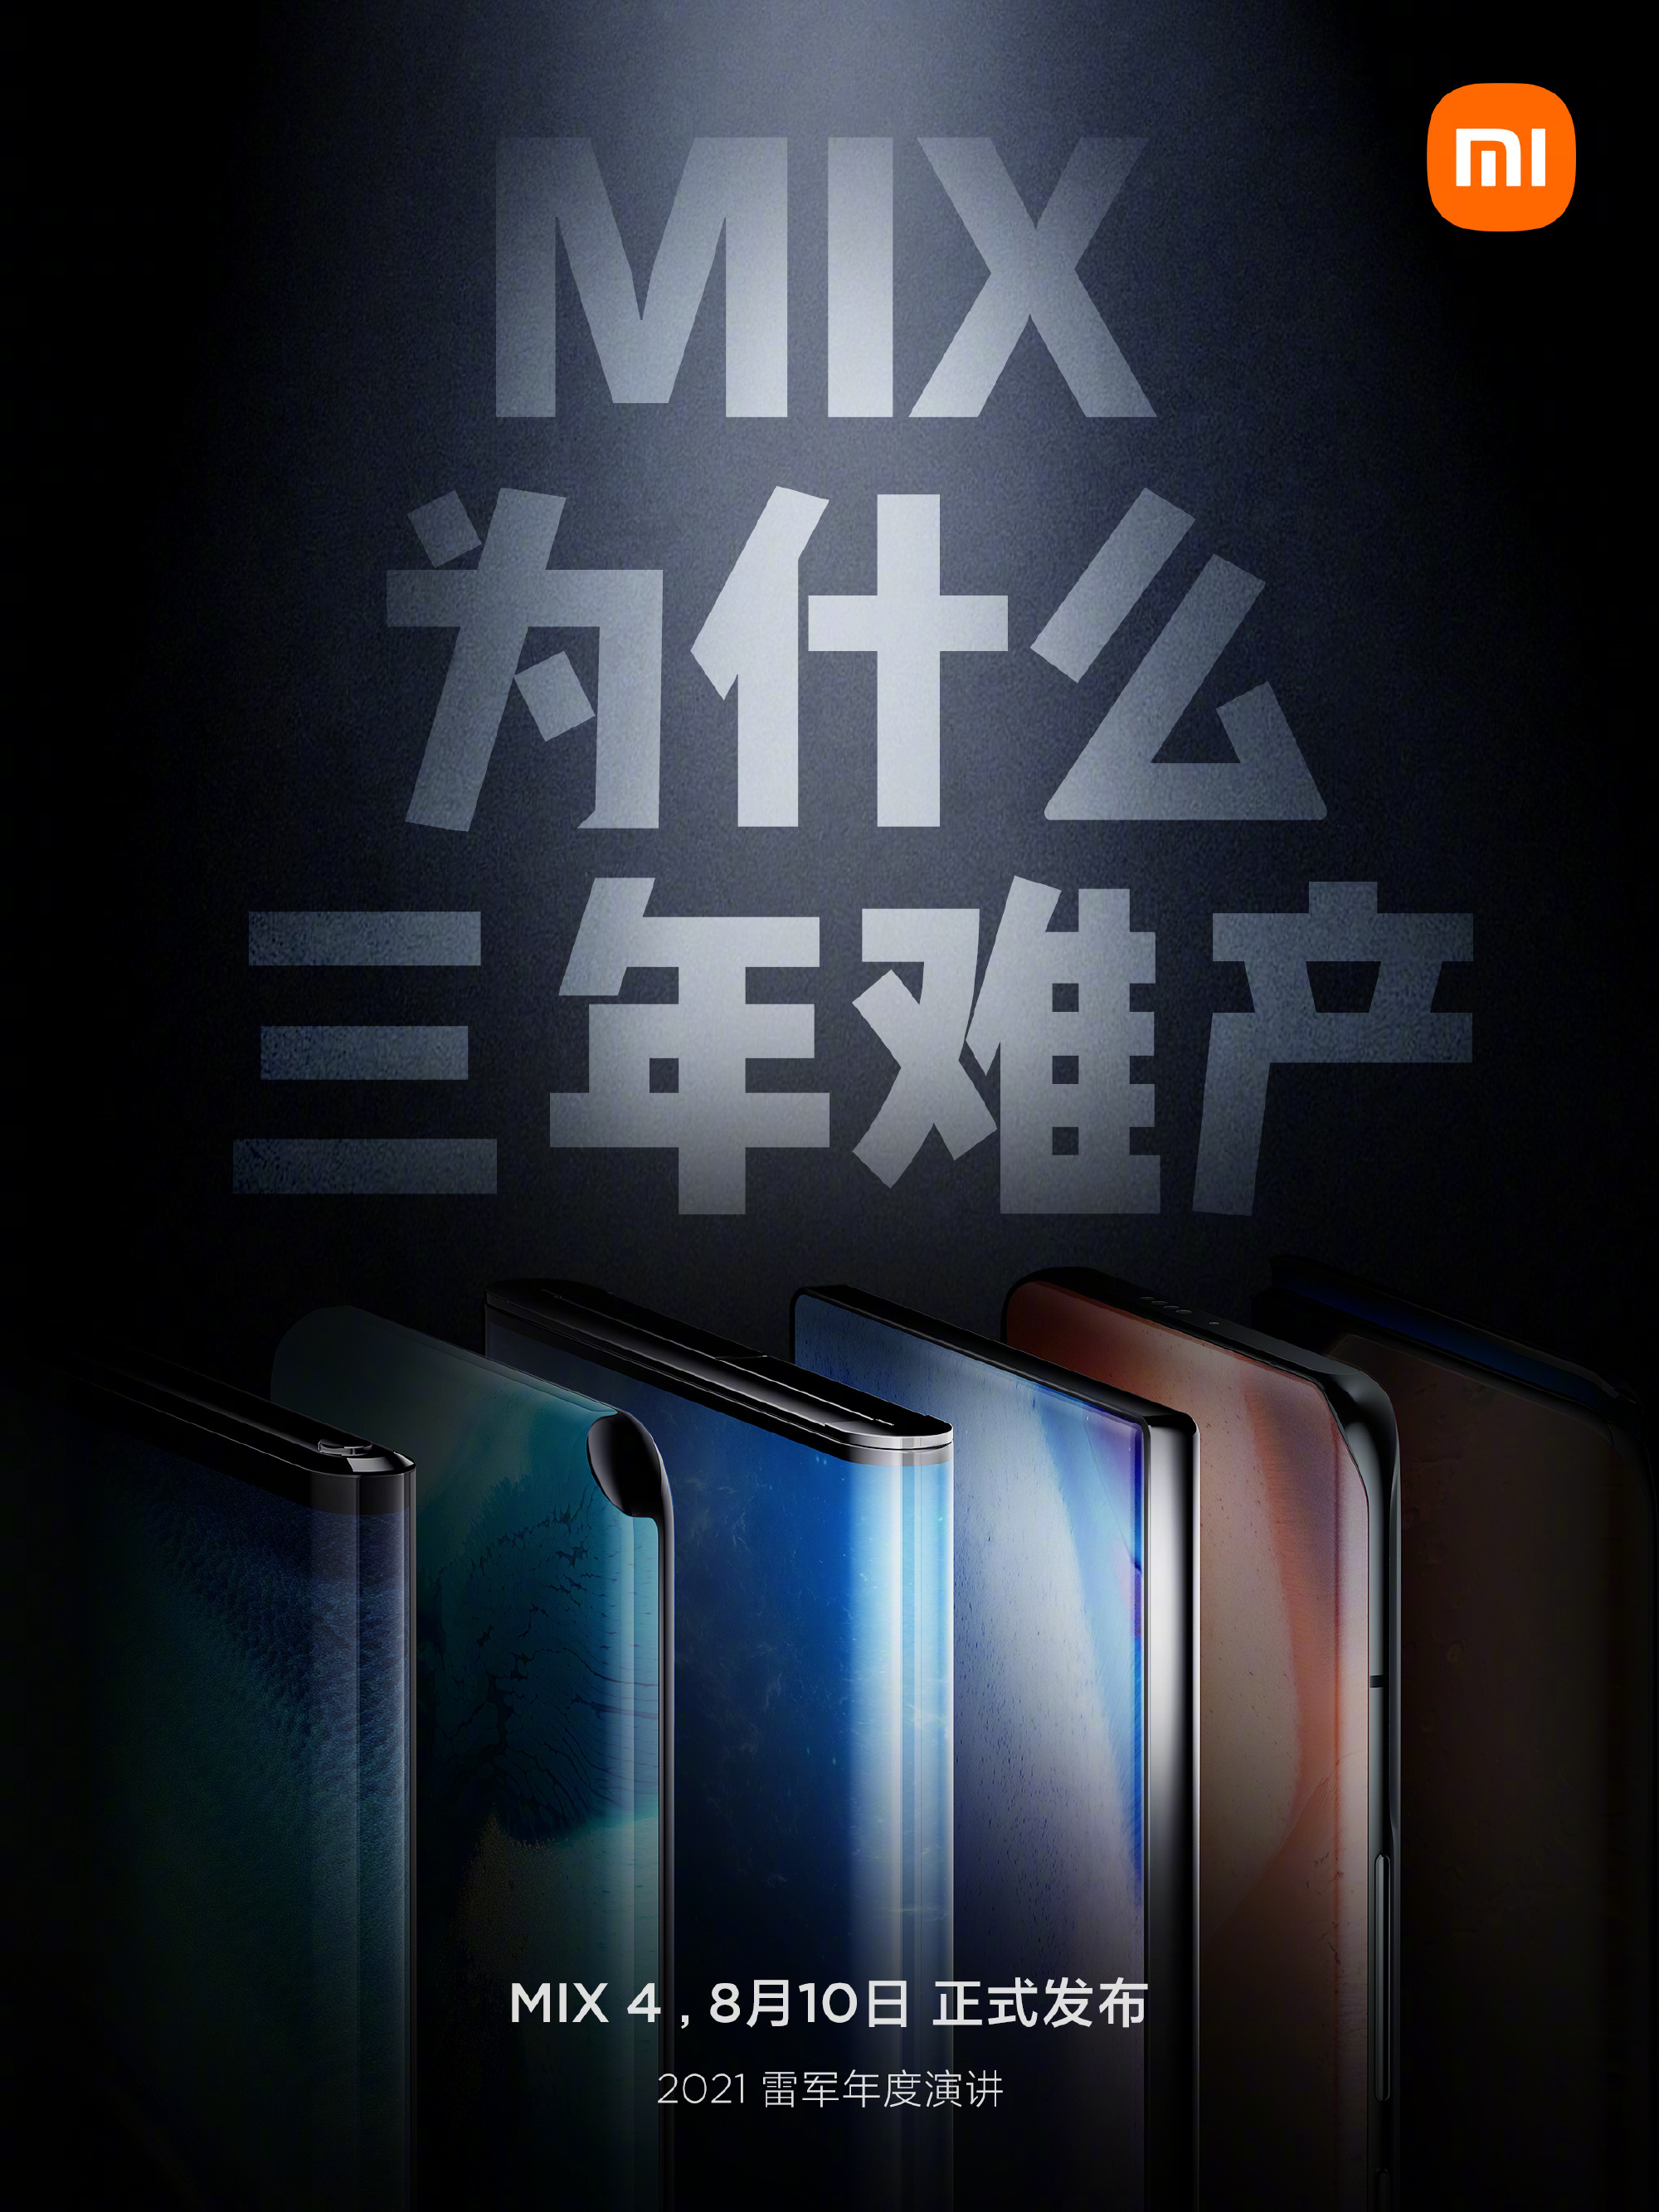 Xiaomi Mi MIX 4 display design teased